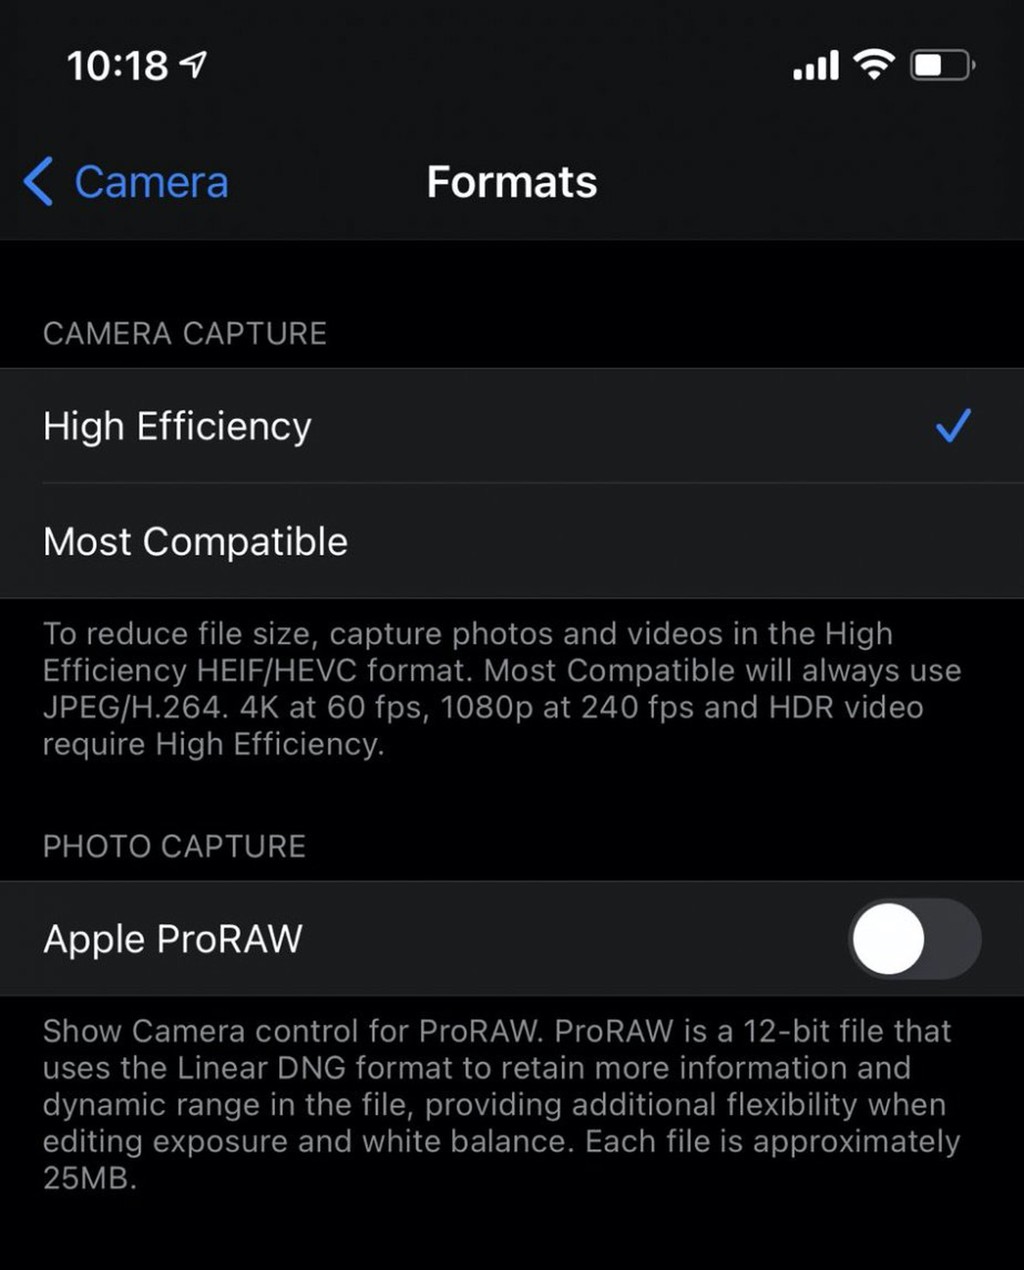 iOS 14.3 beta: theo dõi thai kỳ, chụp ProRAW trên iPhone 12 Pro, tay cầm PS5 ảnh 1